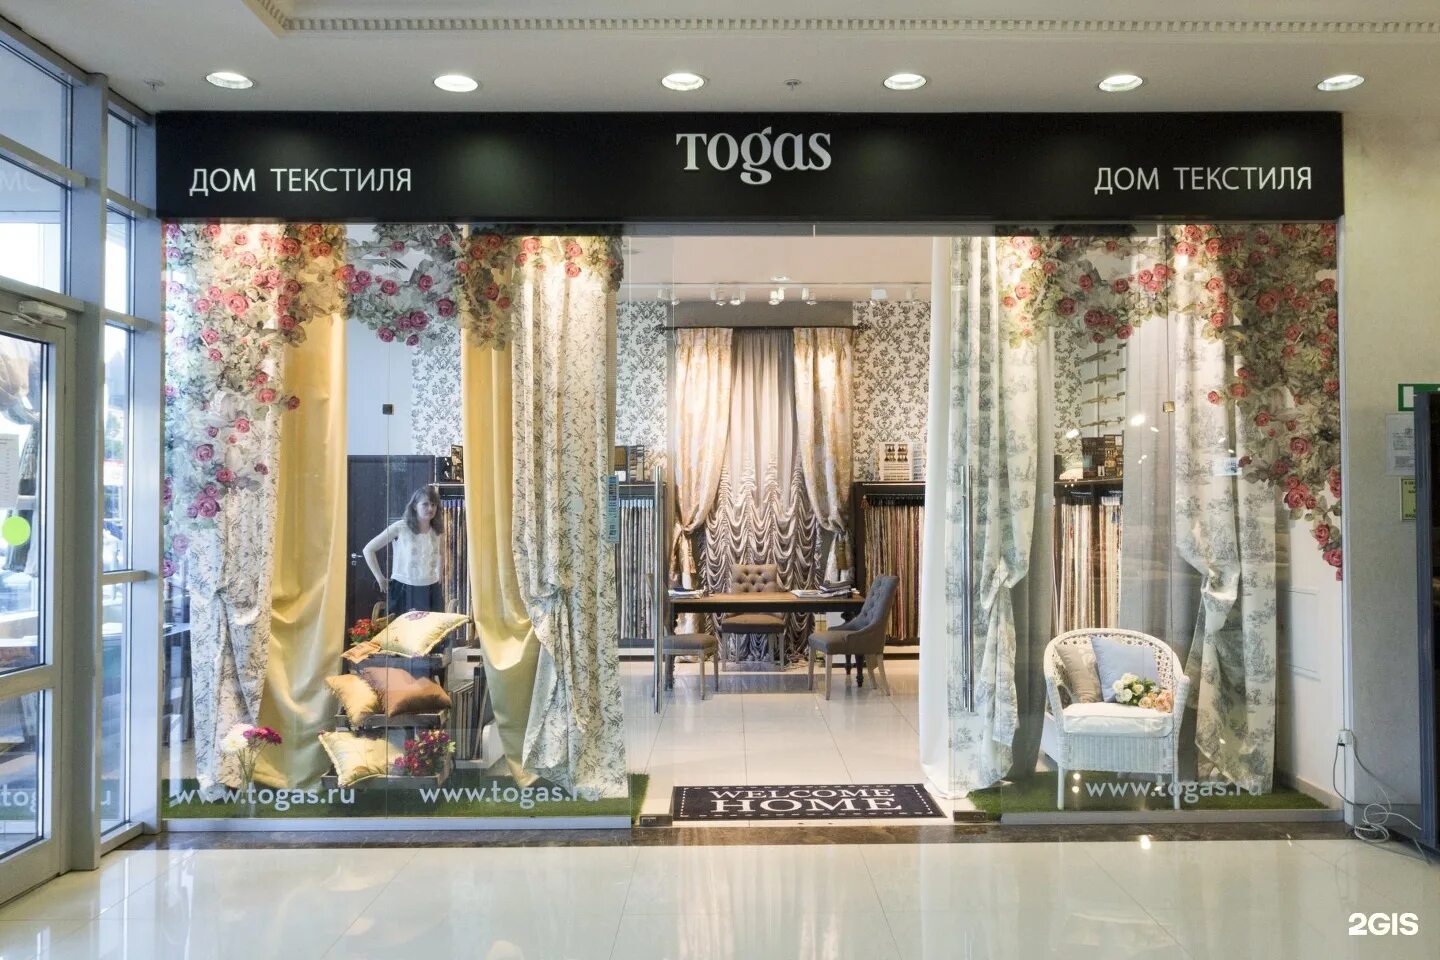 Магазин togas. Витрины Тогас. Togas Home Textile. Togas House of Textiles. Togas Home tekstile.